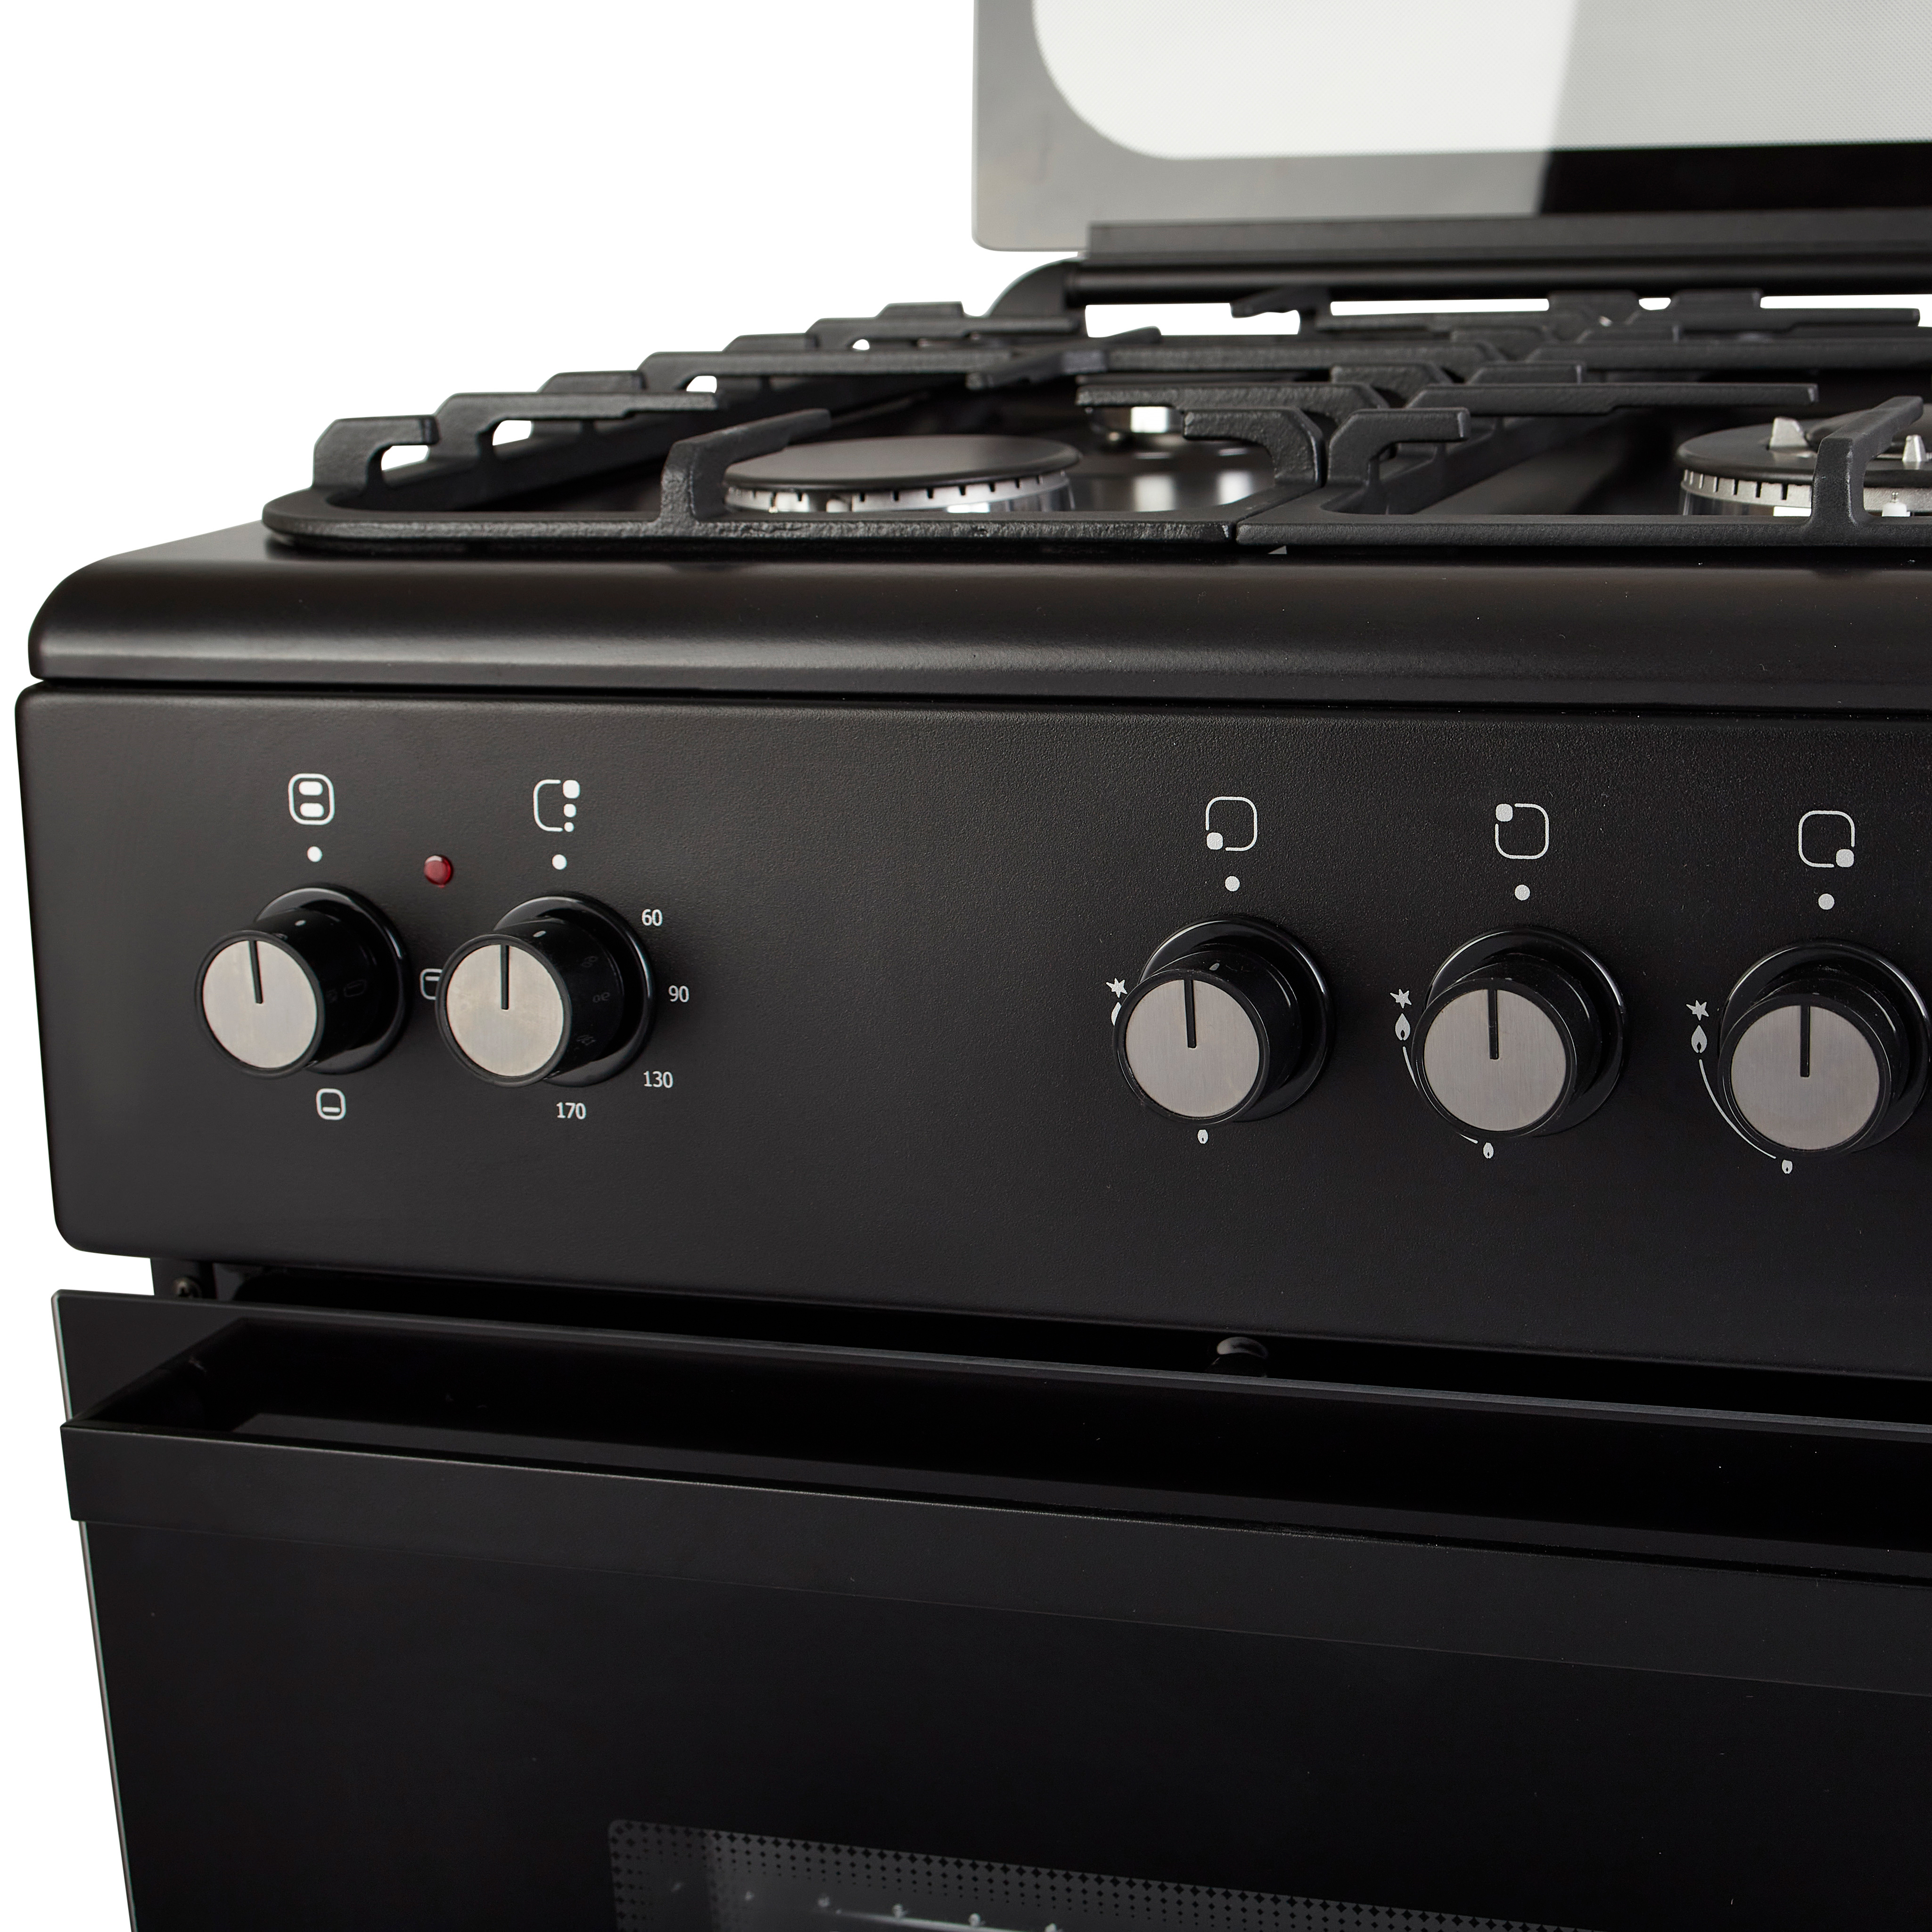 Кухонная плита Fiesta C 6403 SADVсG-BL характеристики - фотография 7